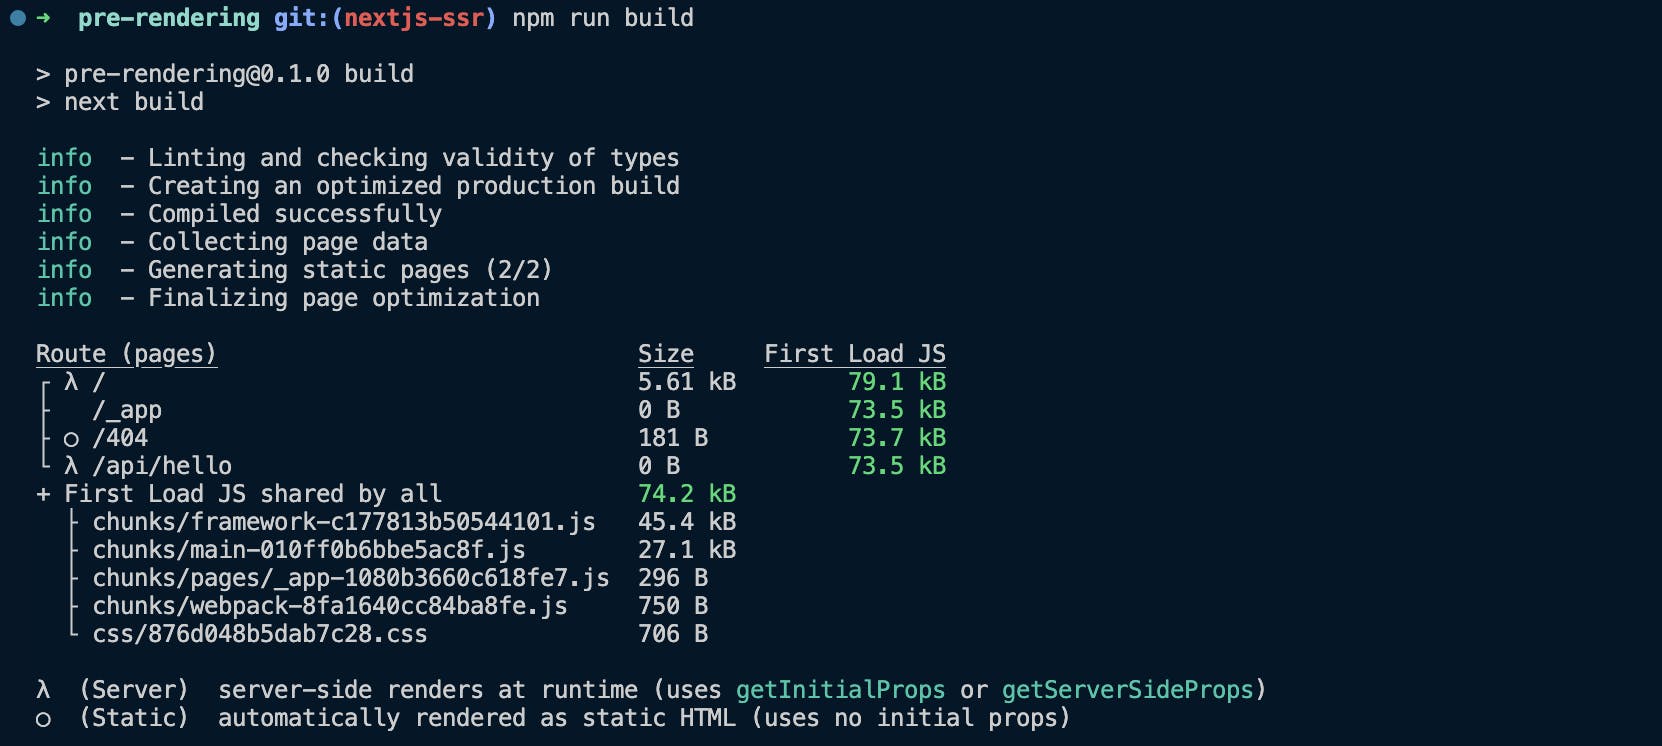 Build log of SSR implementation with NextJS